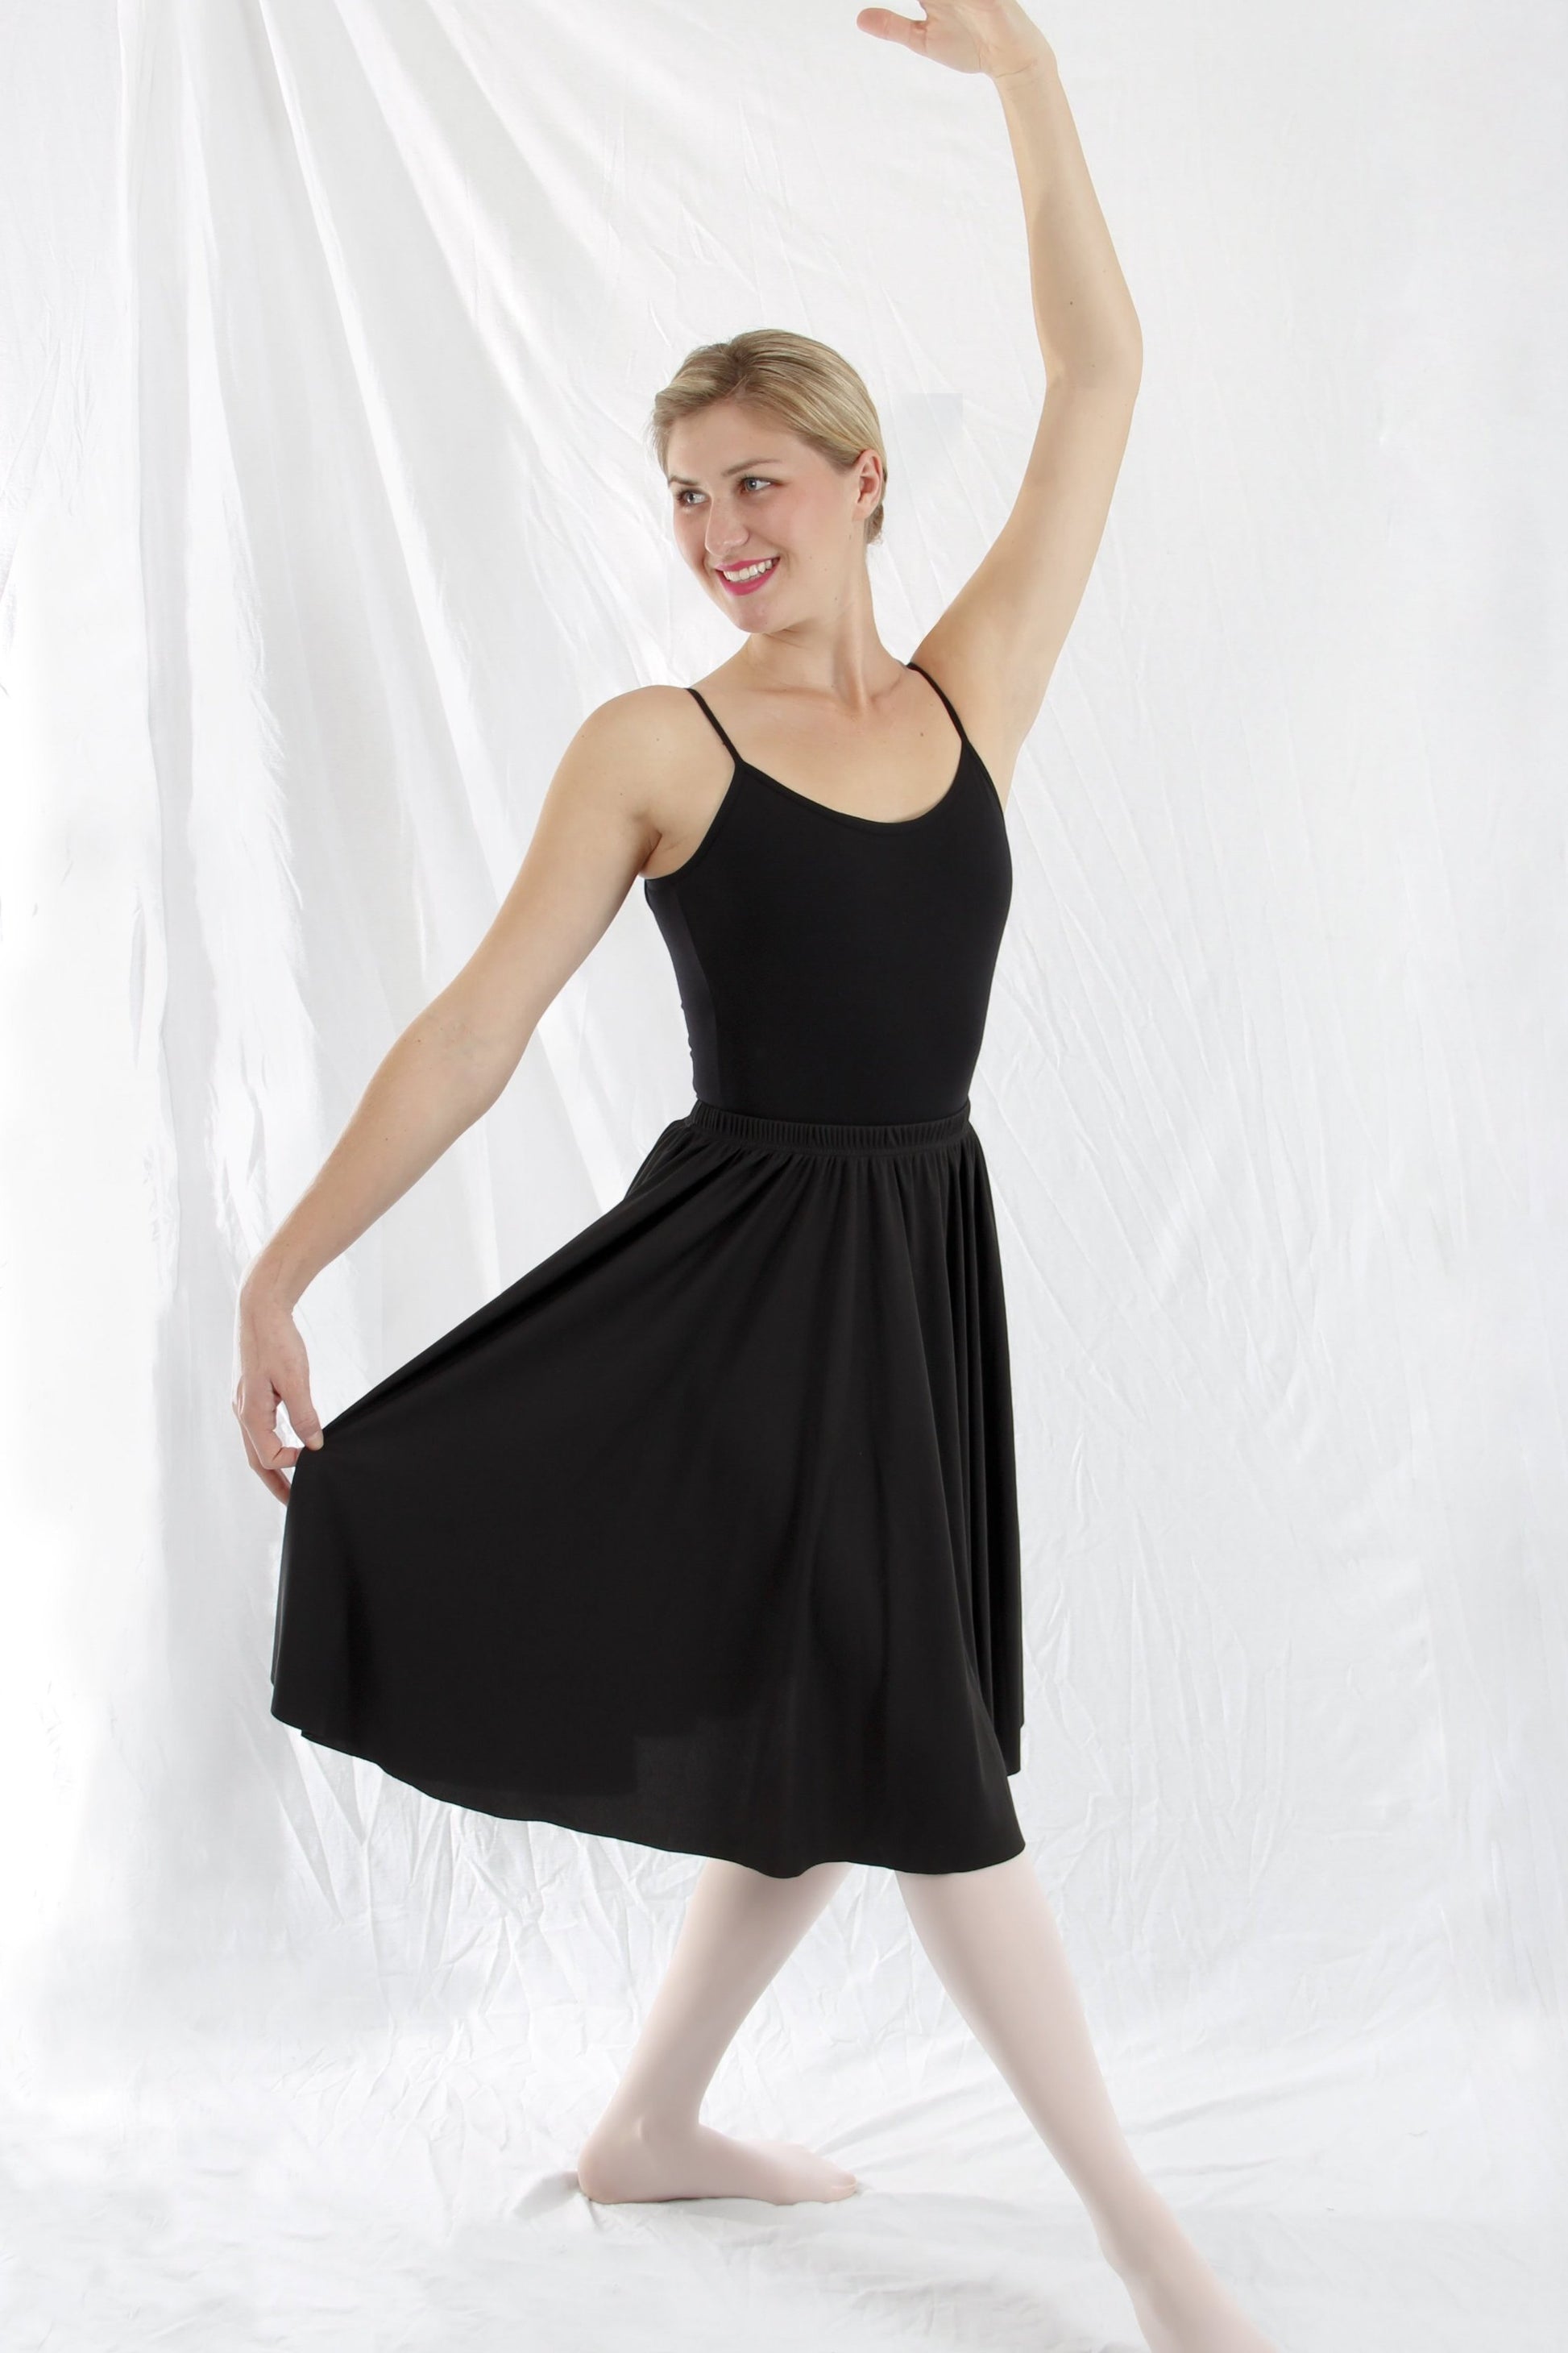 Woman Elastic Waistband Black Character Skirt by Basic Moves